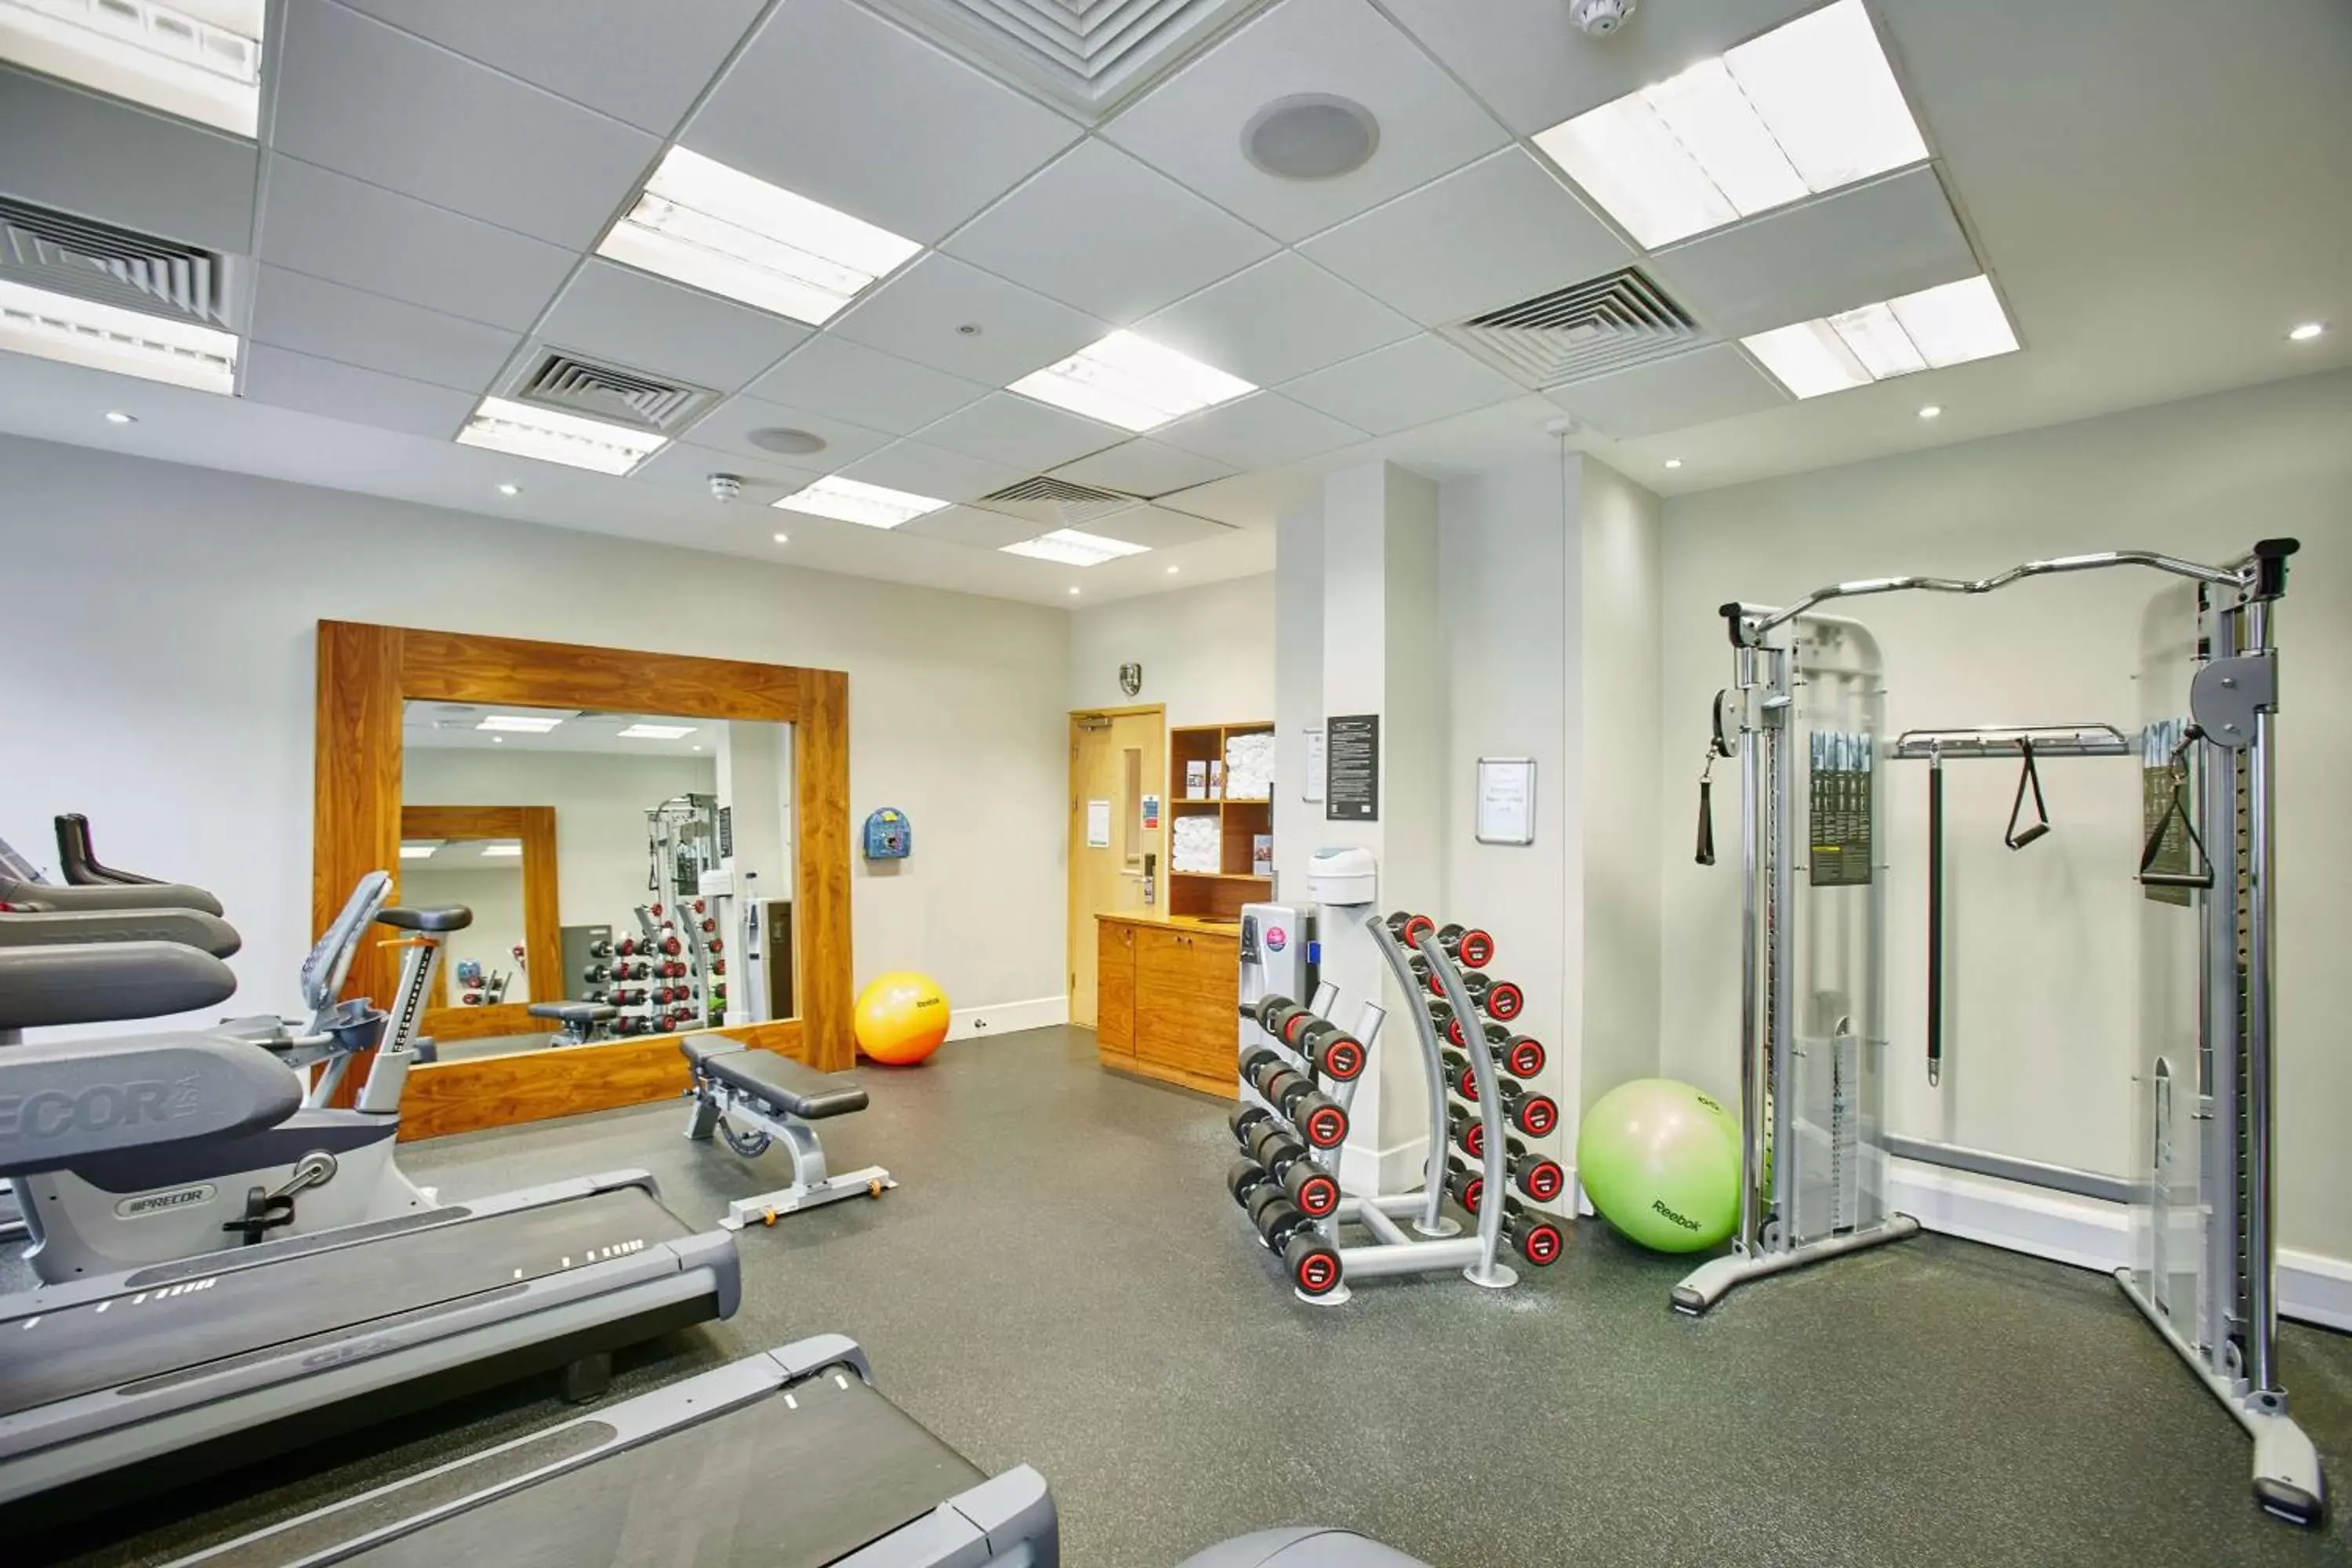 Fitness centre/facilities, Fitness Center/Facilities in Hilton Garden Inn Bristol City Centre